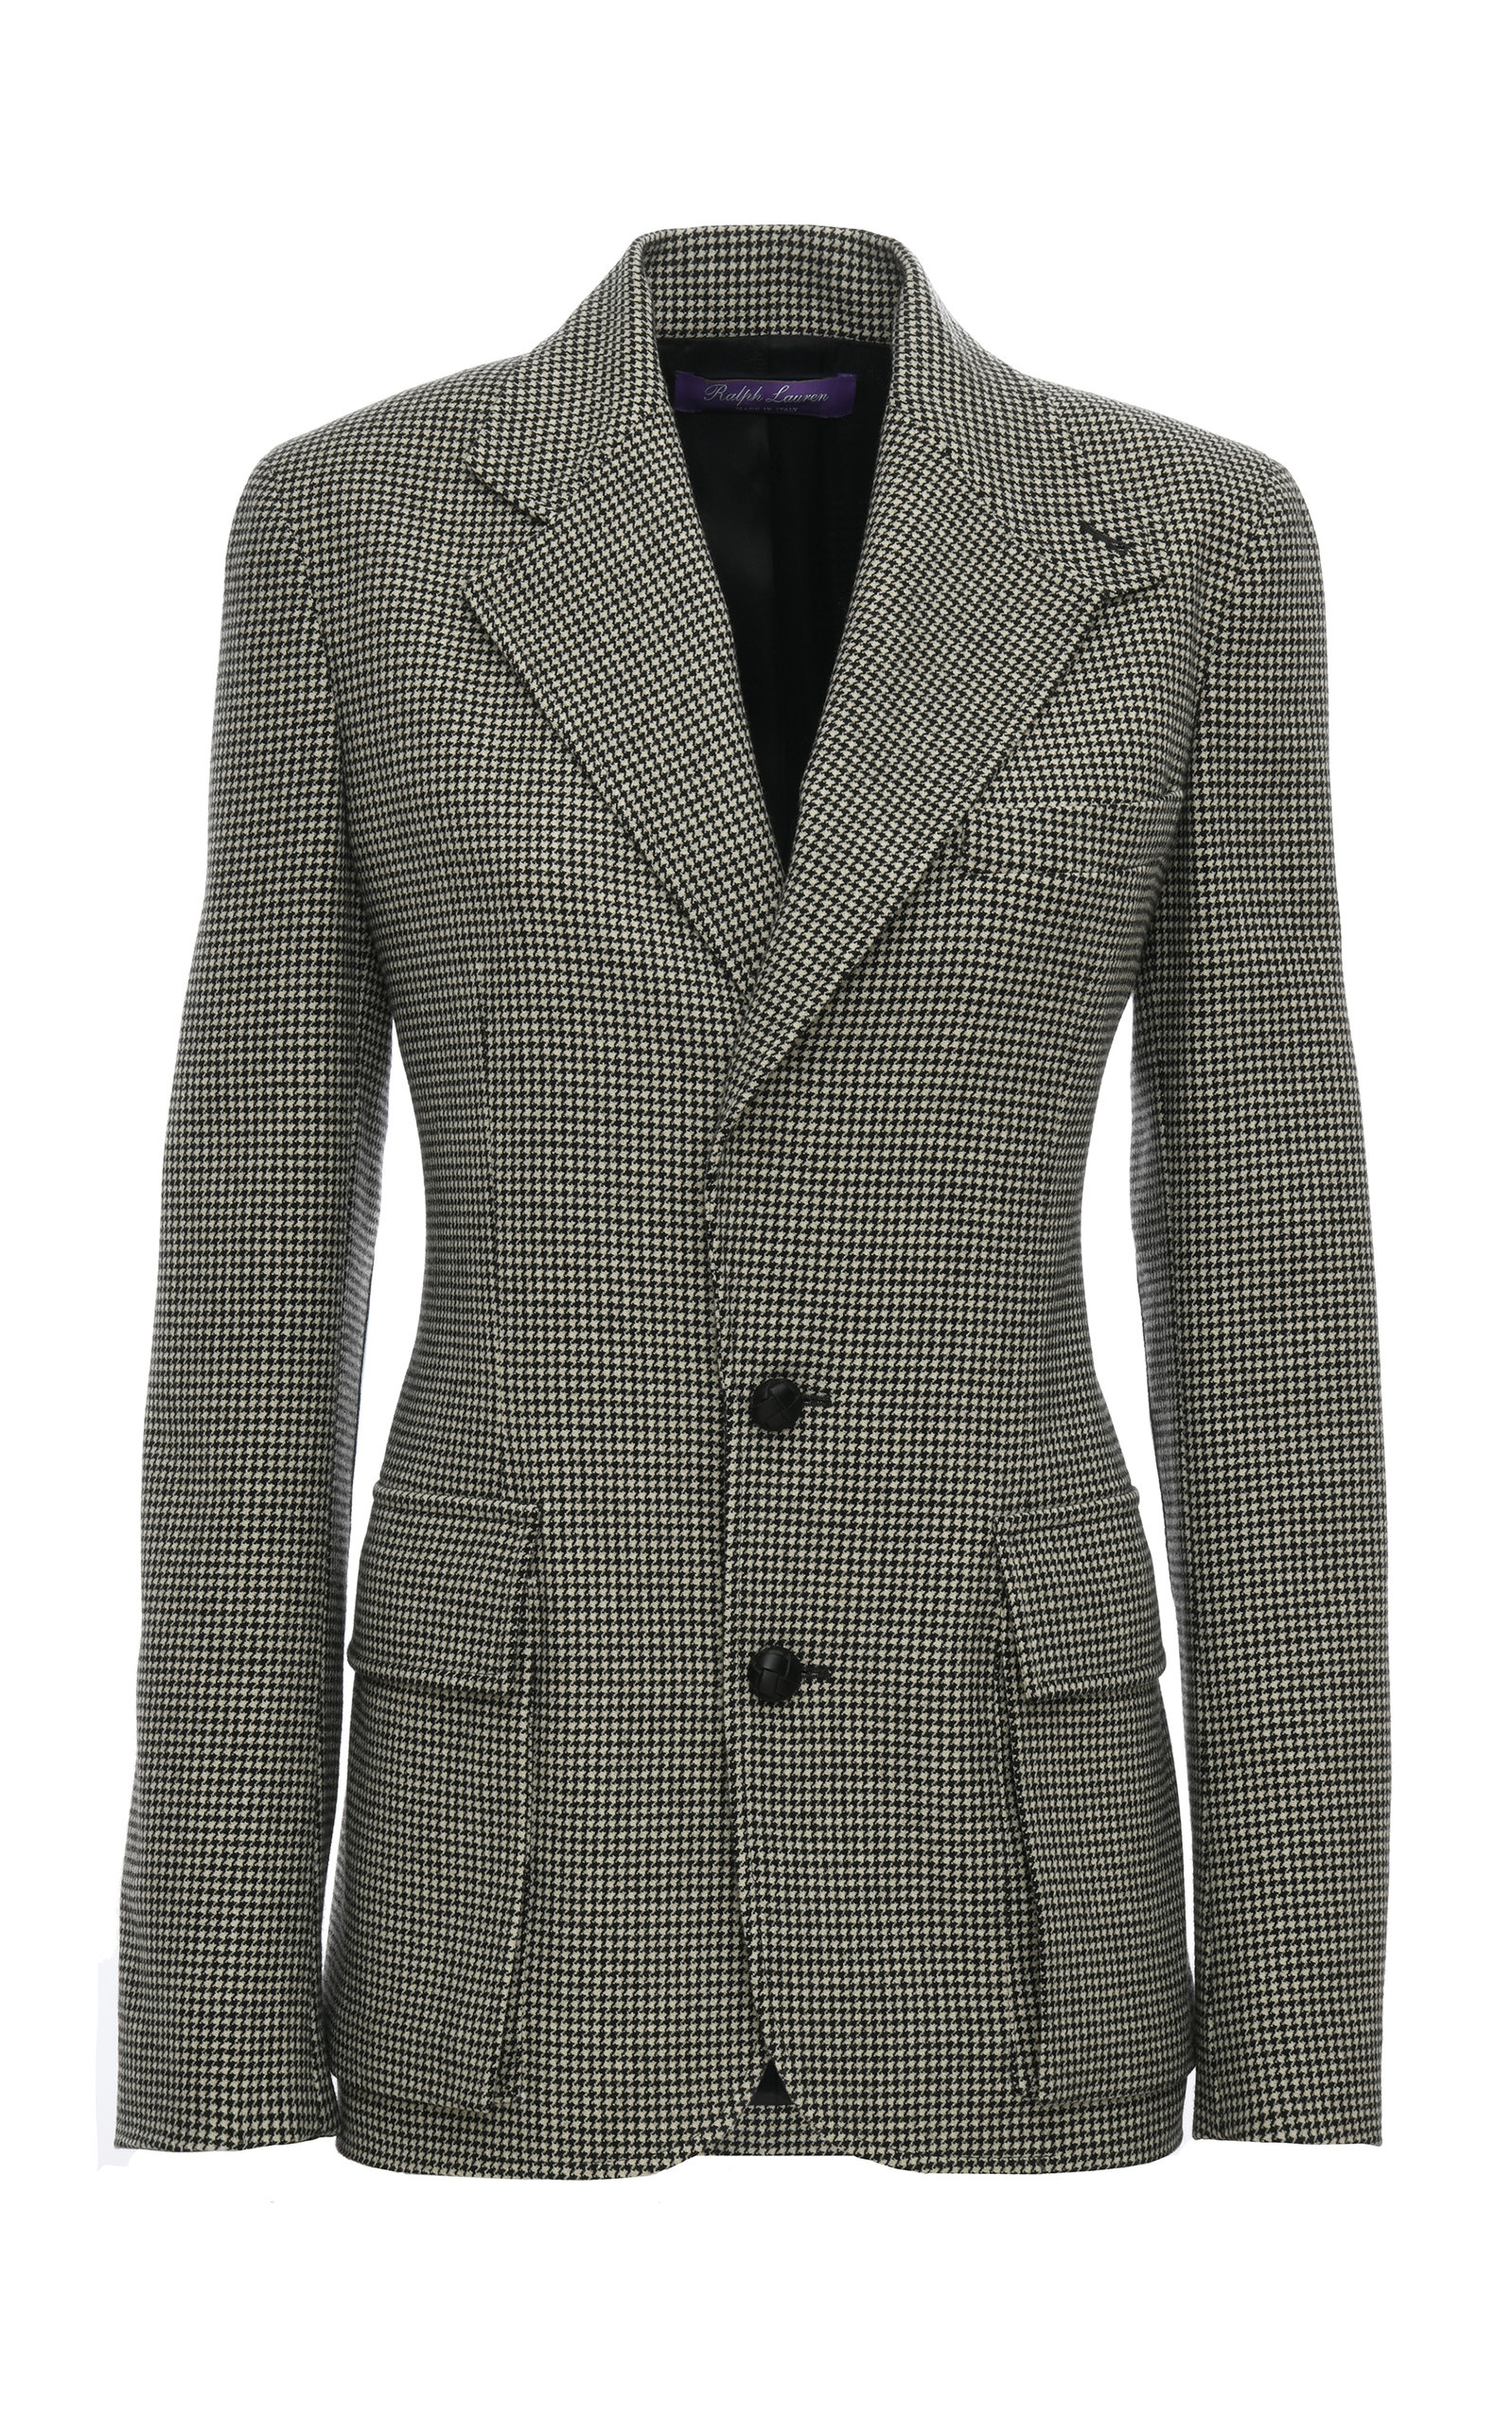 Ralph Lauren - Women's Preston Wool Jacket - Black/white - US 4 - Moda Operandi